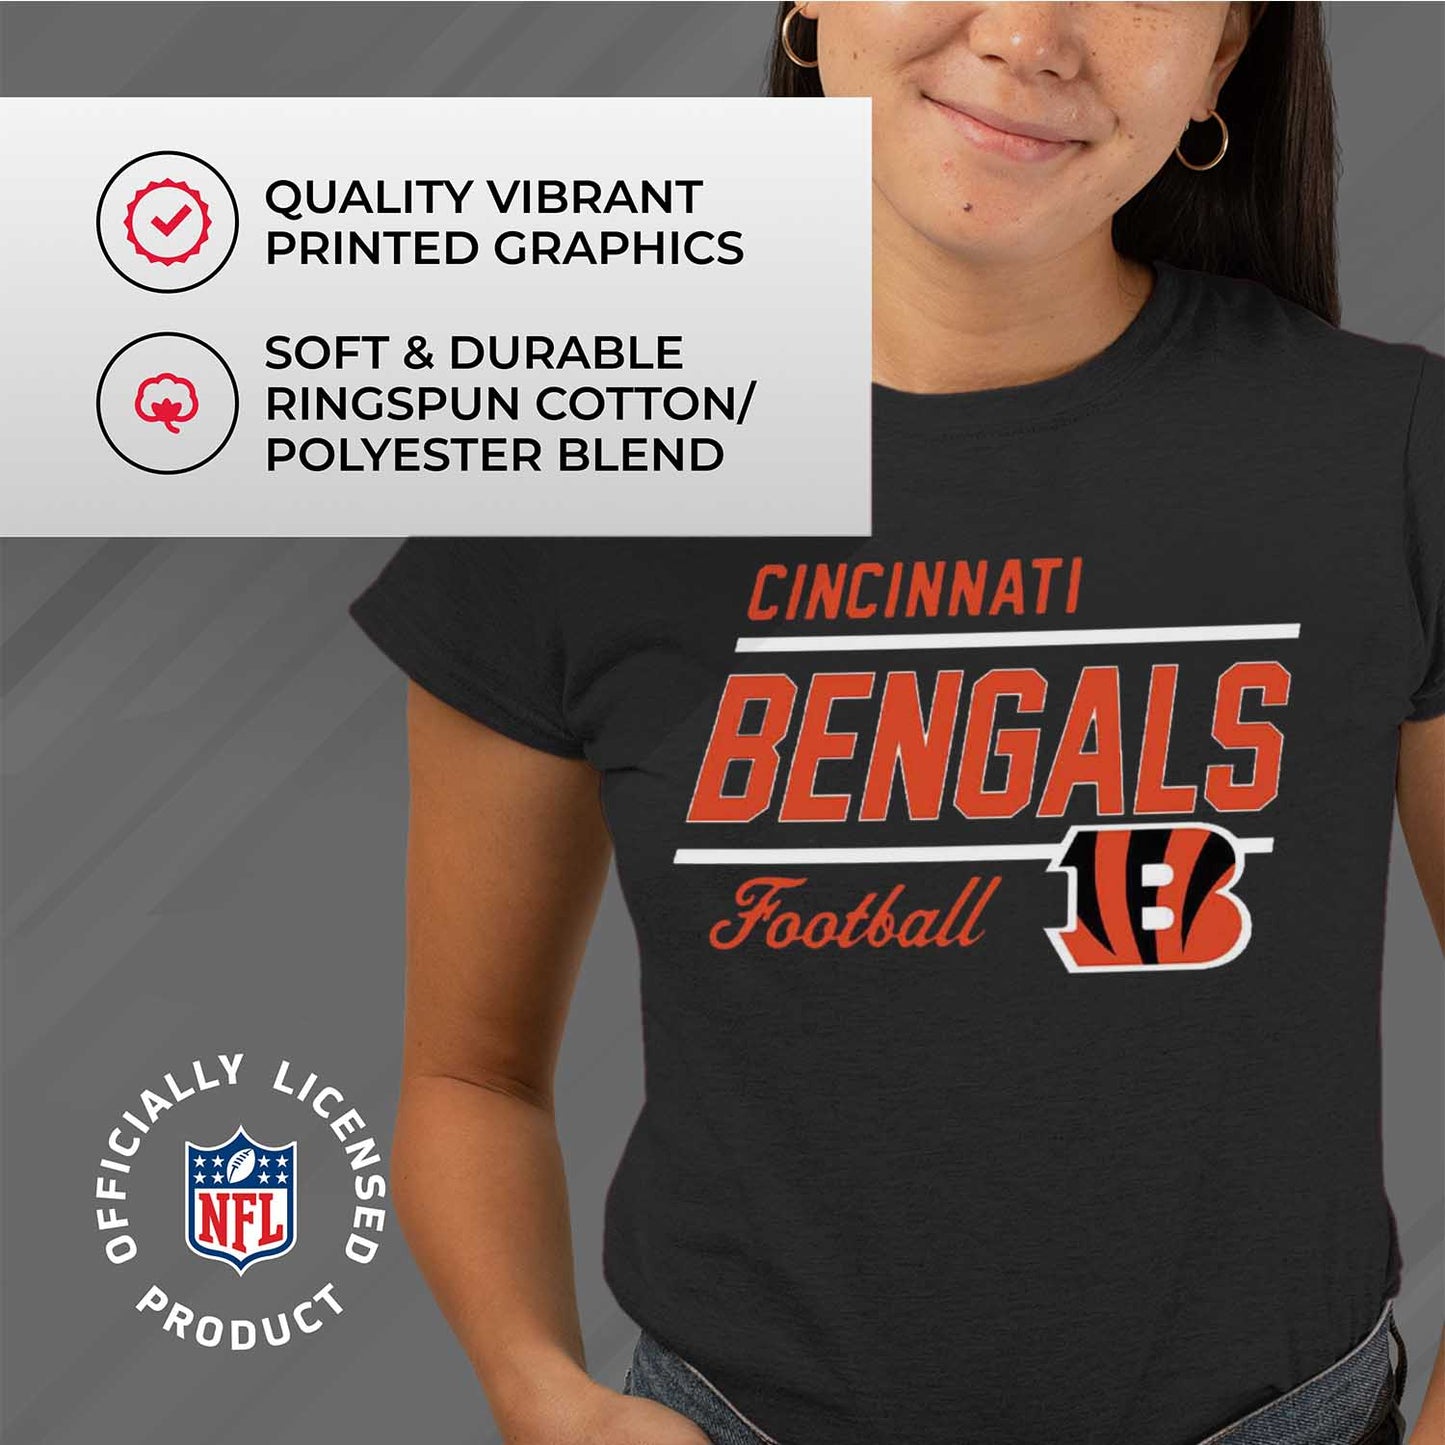 Cincinnati Bengals NFL Gameday Women's Relaxed Fit T-shirt - Black